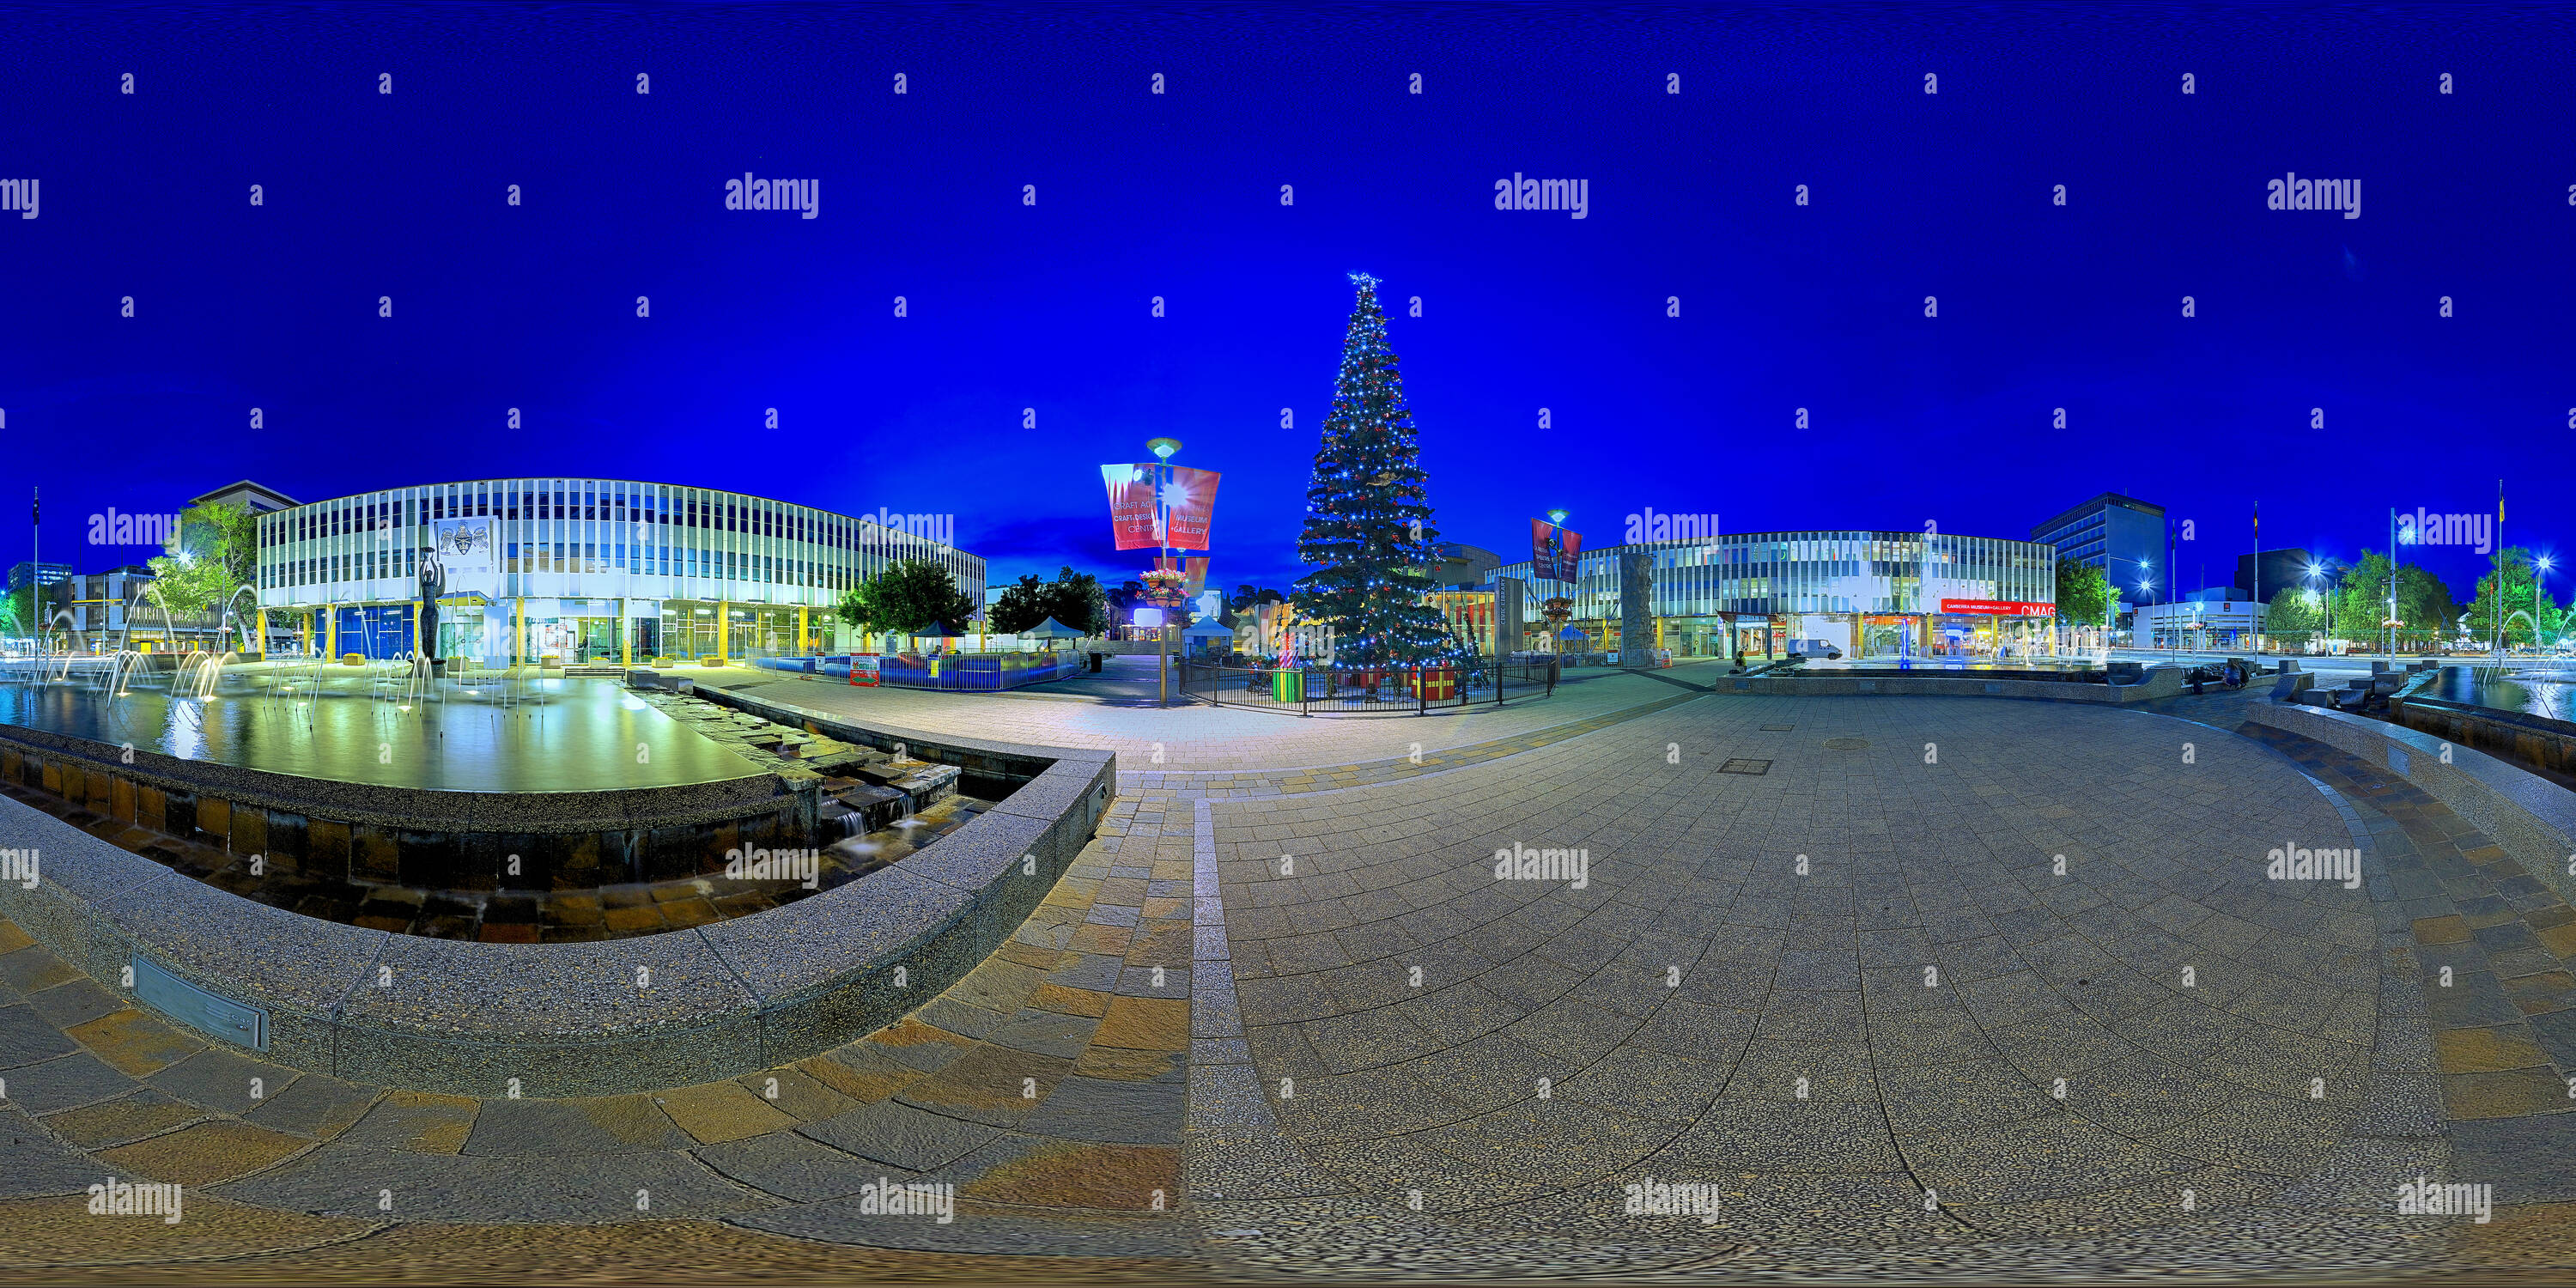 Visualizzazione panoramica a 360 gradi di Canberra - Piazza Civica albero di Natale 2013